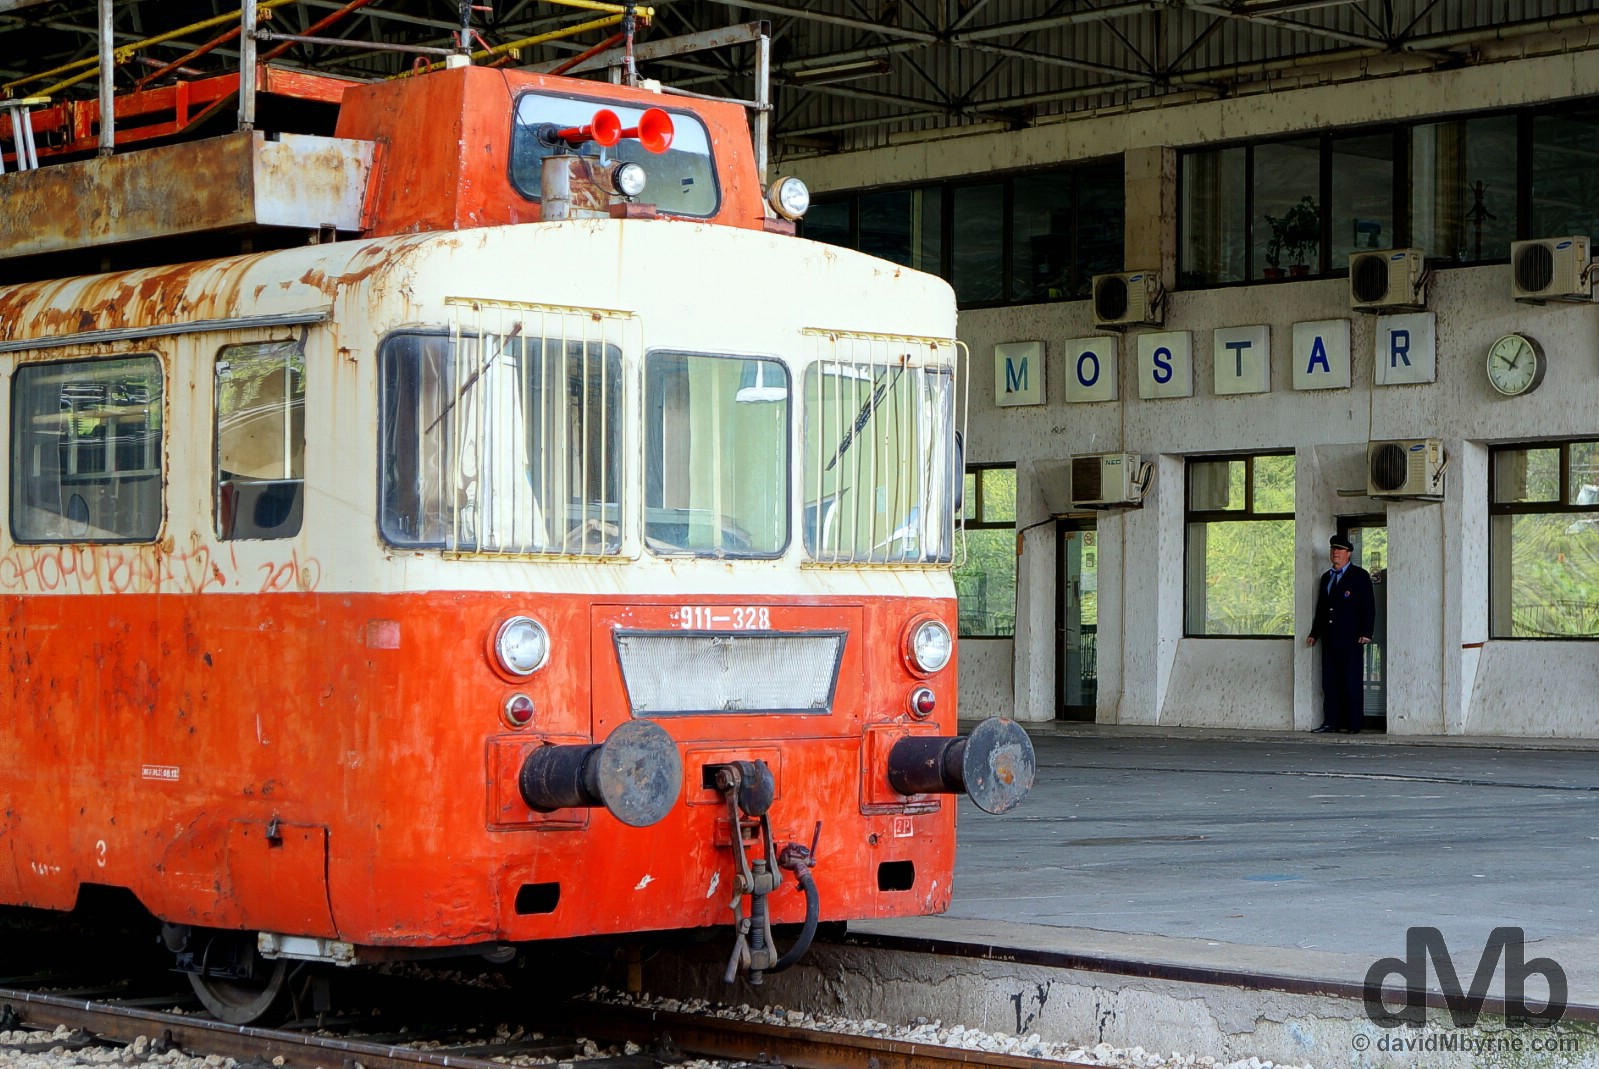 Mostar train station, Bosnia & Herzegovina. April 6, 2015. 